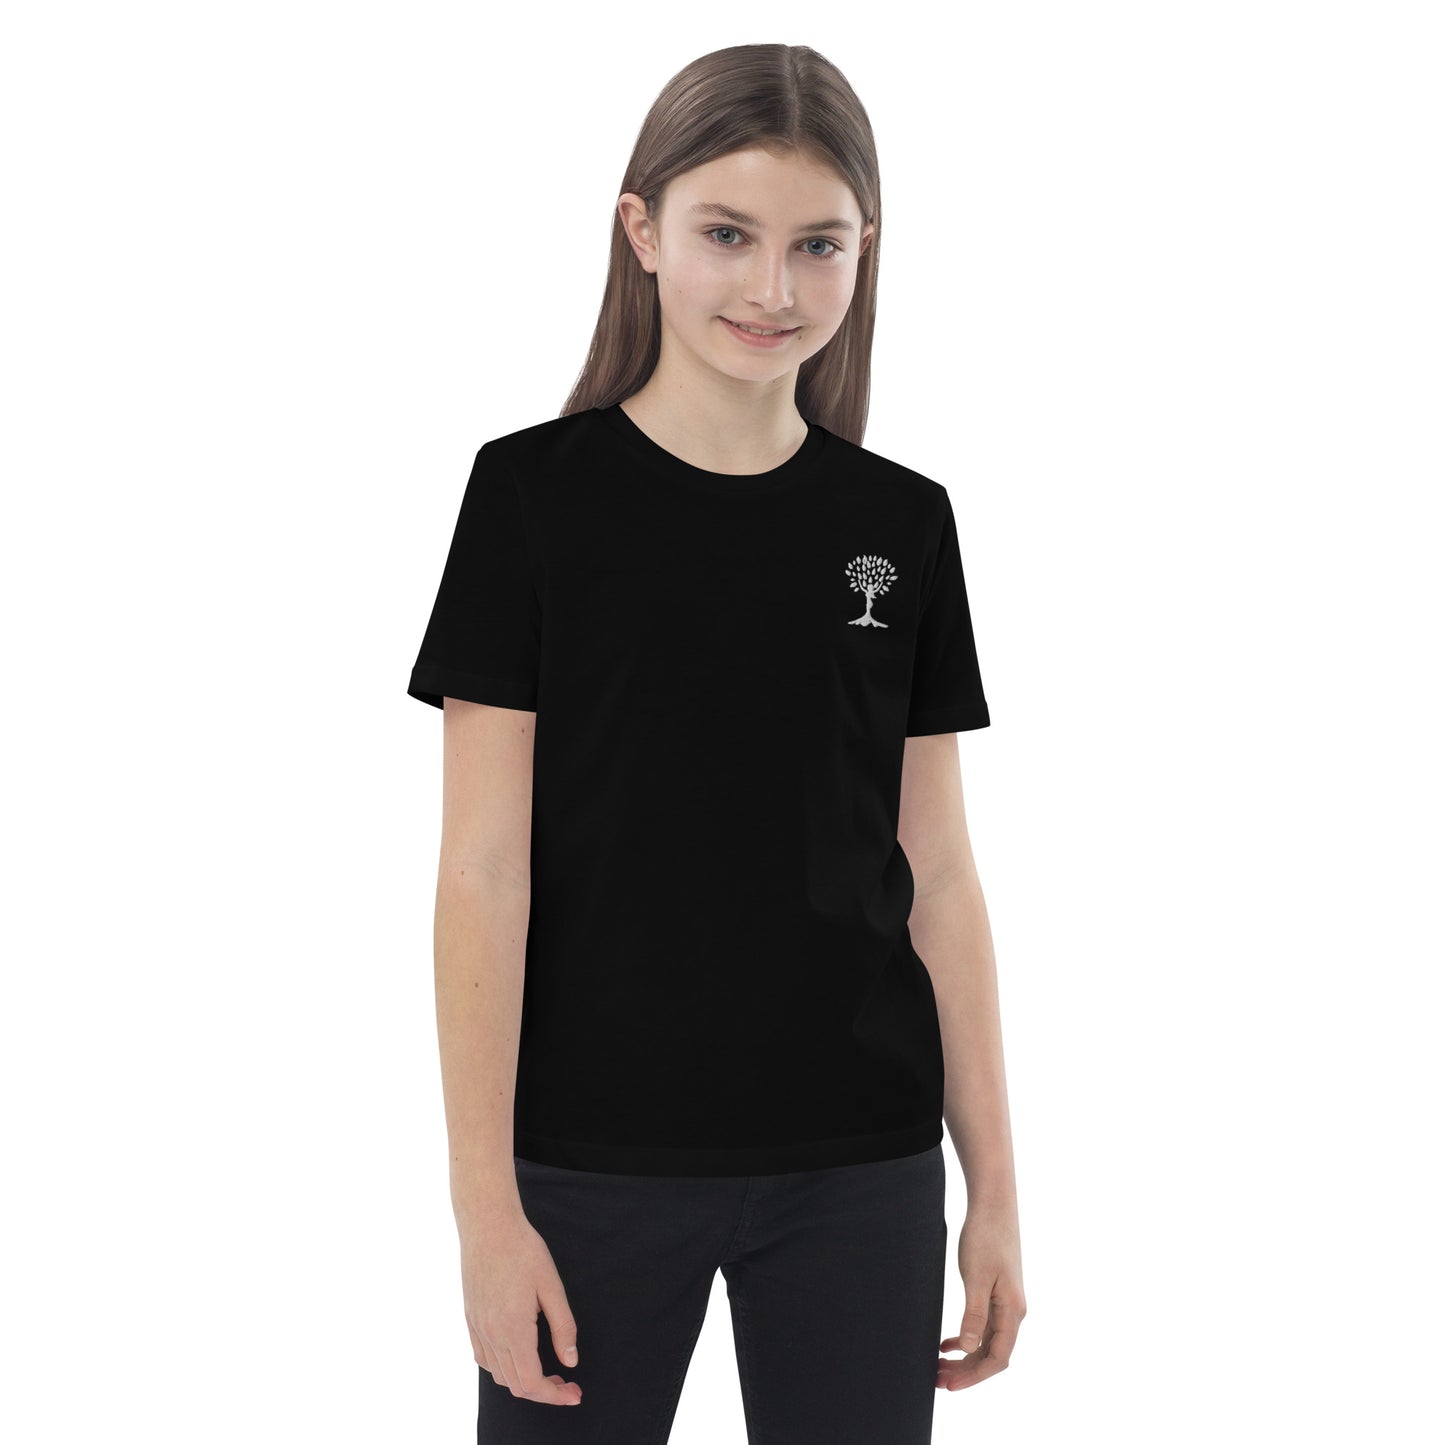 Kids Unisex black t-shirt